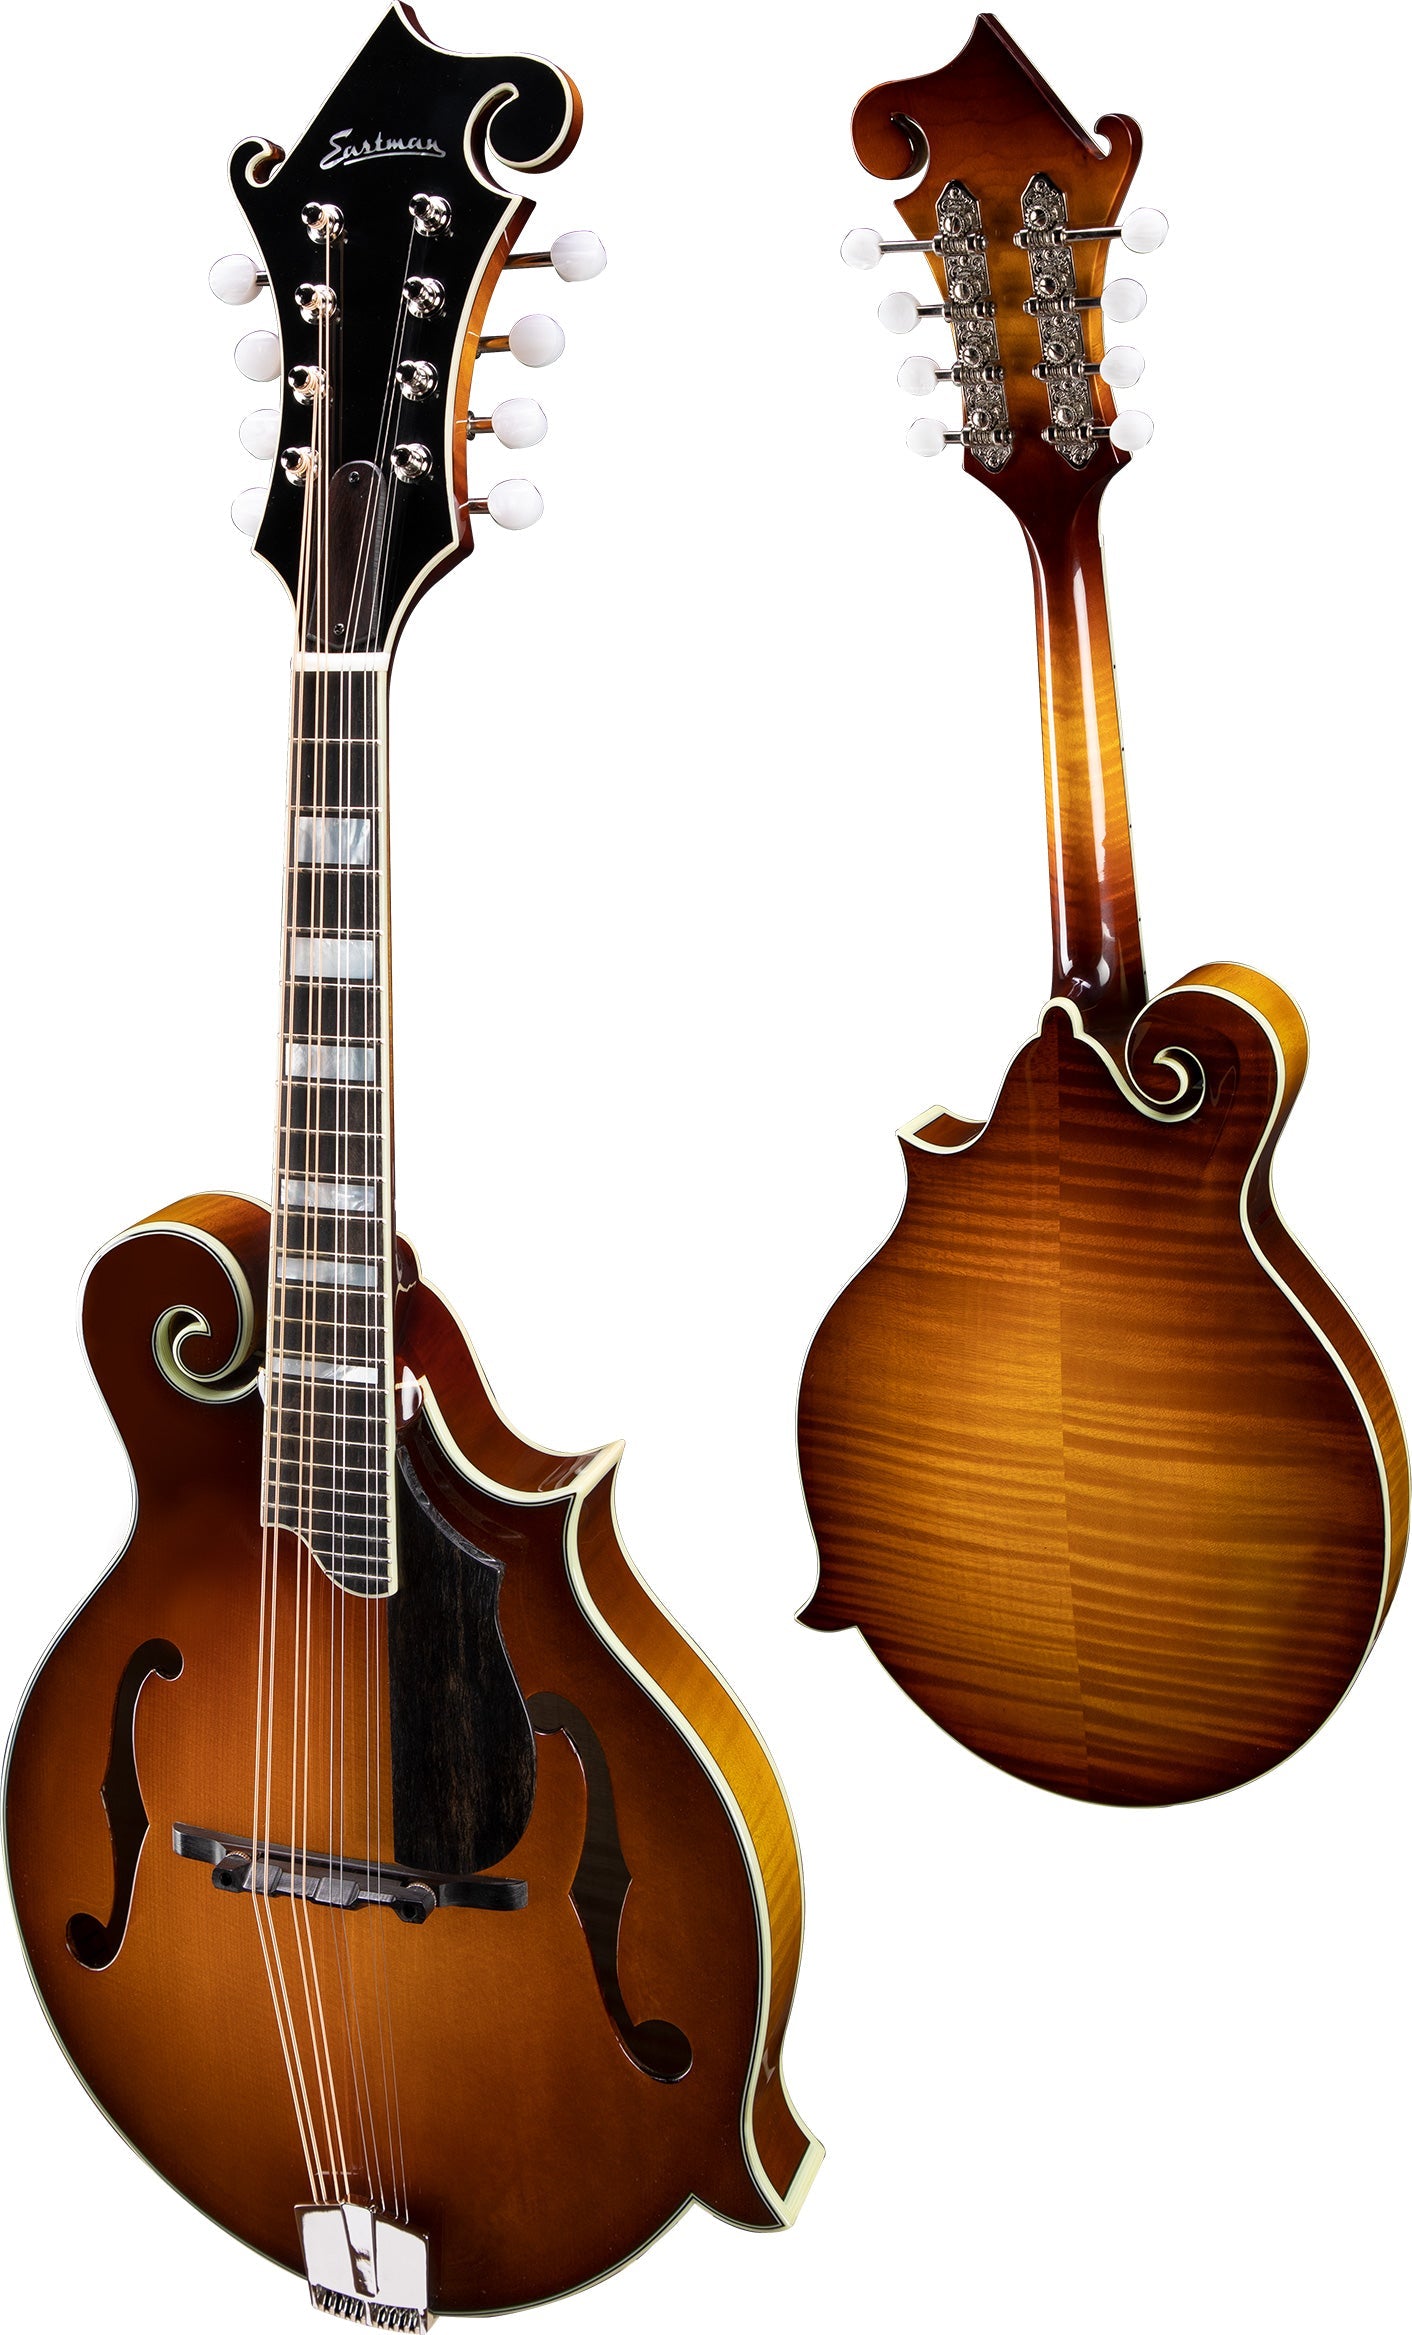 Eastman MD615-GB  F-style F-holes Goldburst Mandolin, Mandolin for sale at Richards Guitars.